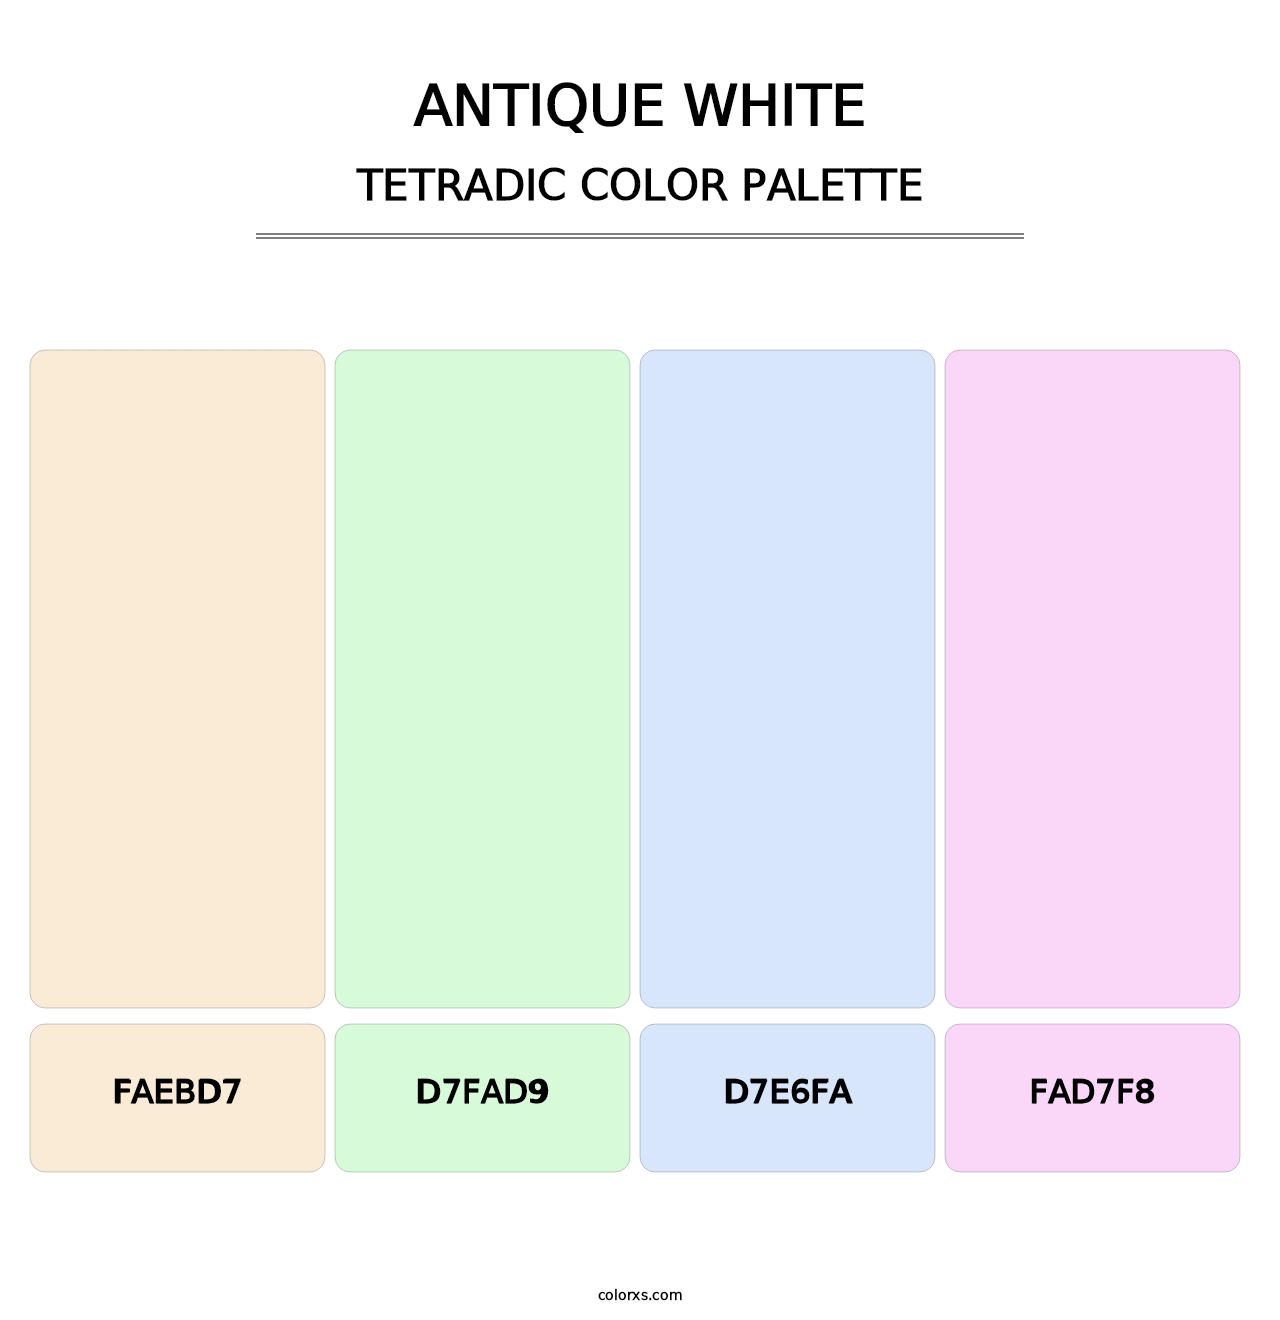 Antique White - Tetradic Color Palette